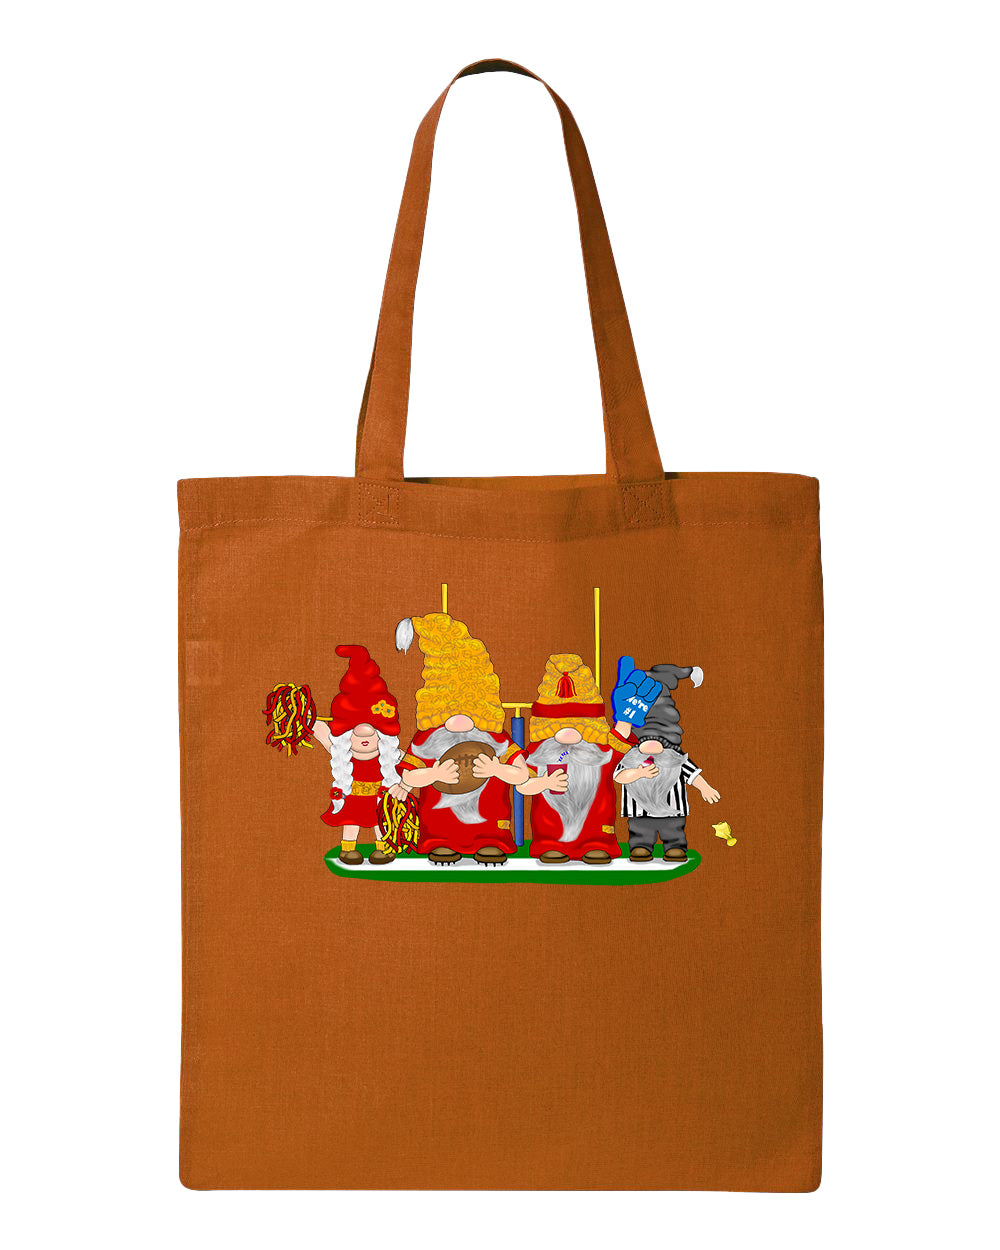 Red & Gold Football Gnomes  (similar to Kansas City) on Tote